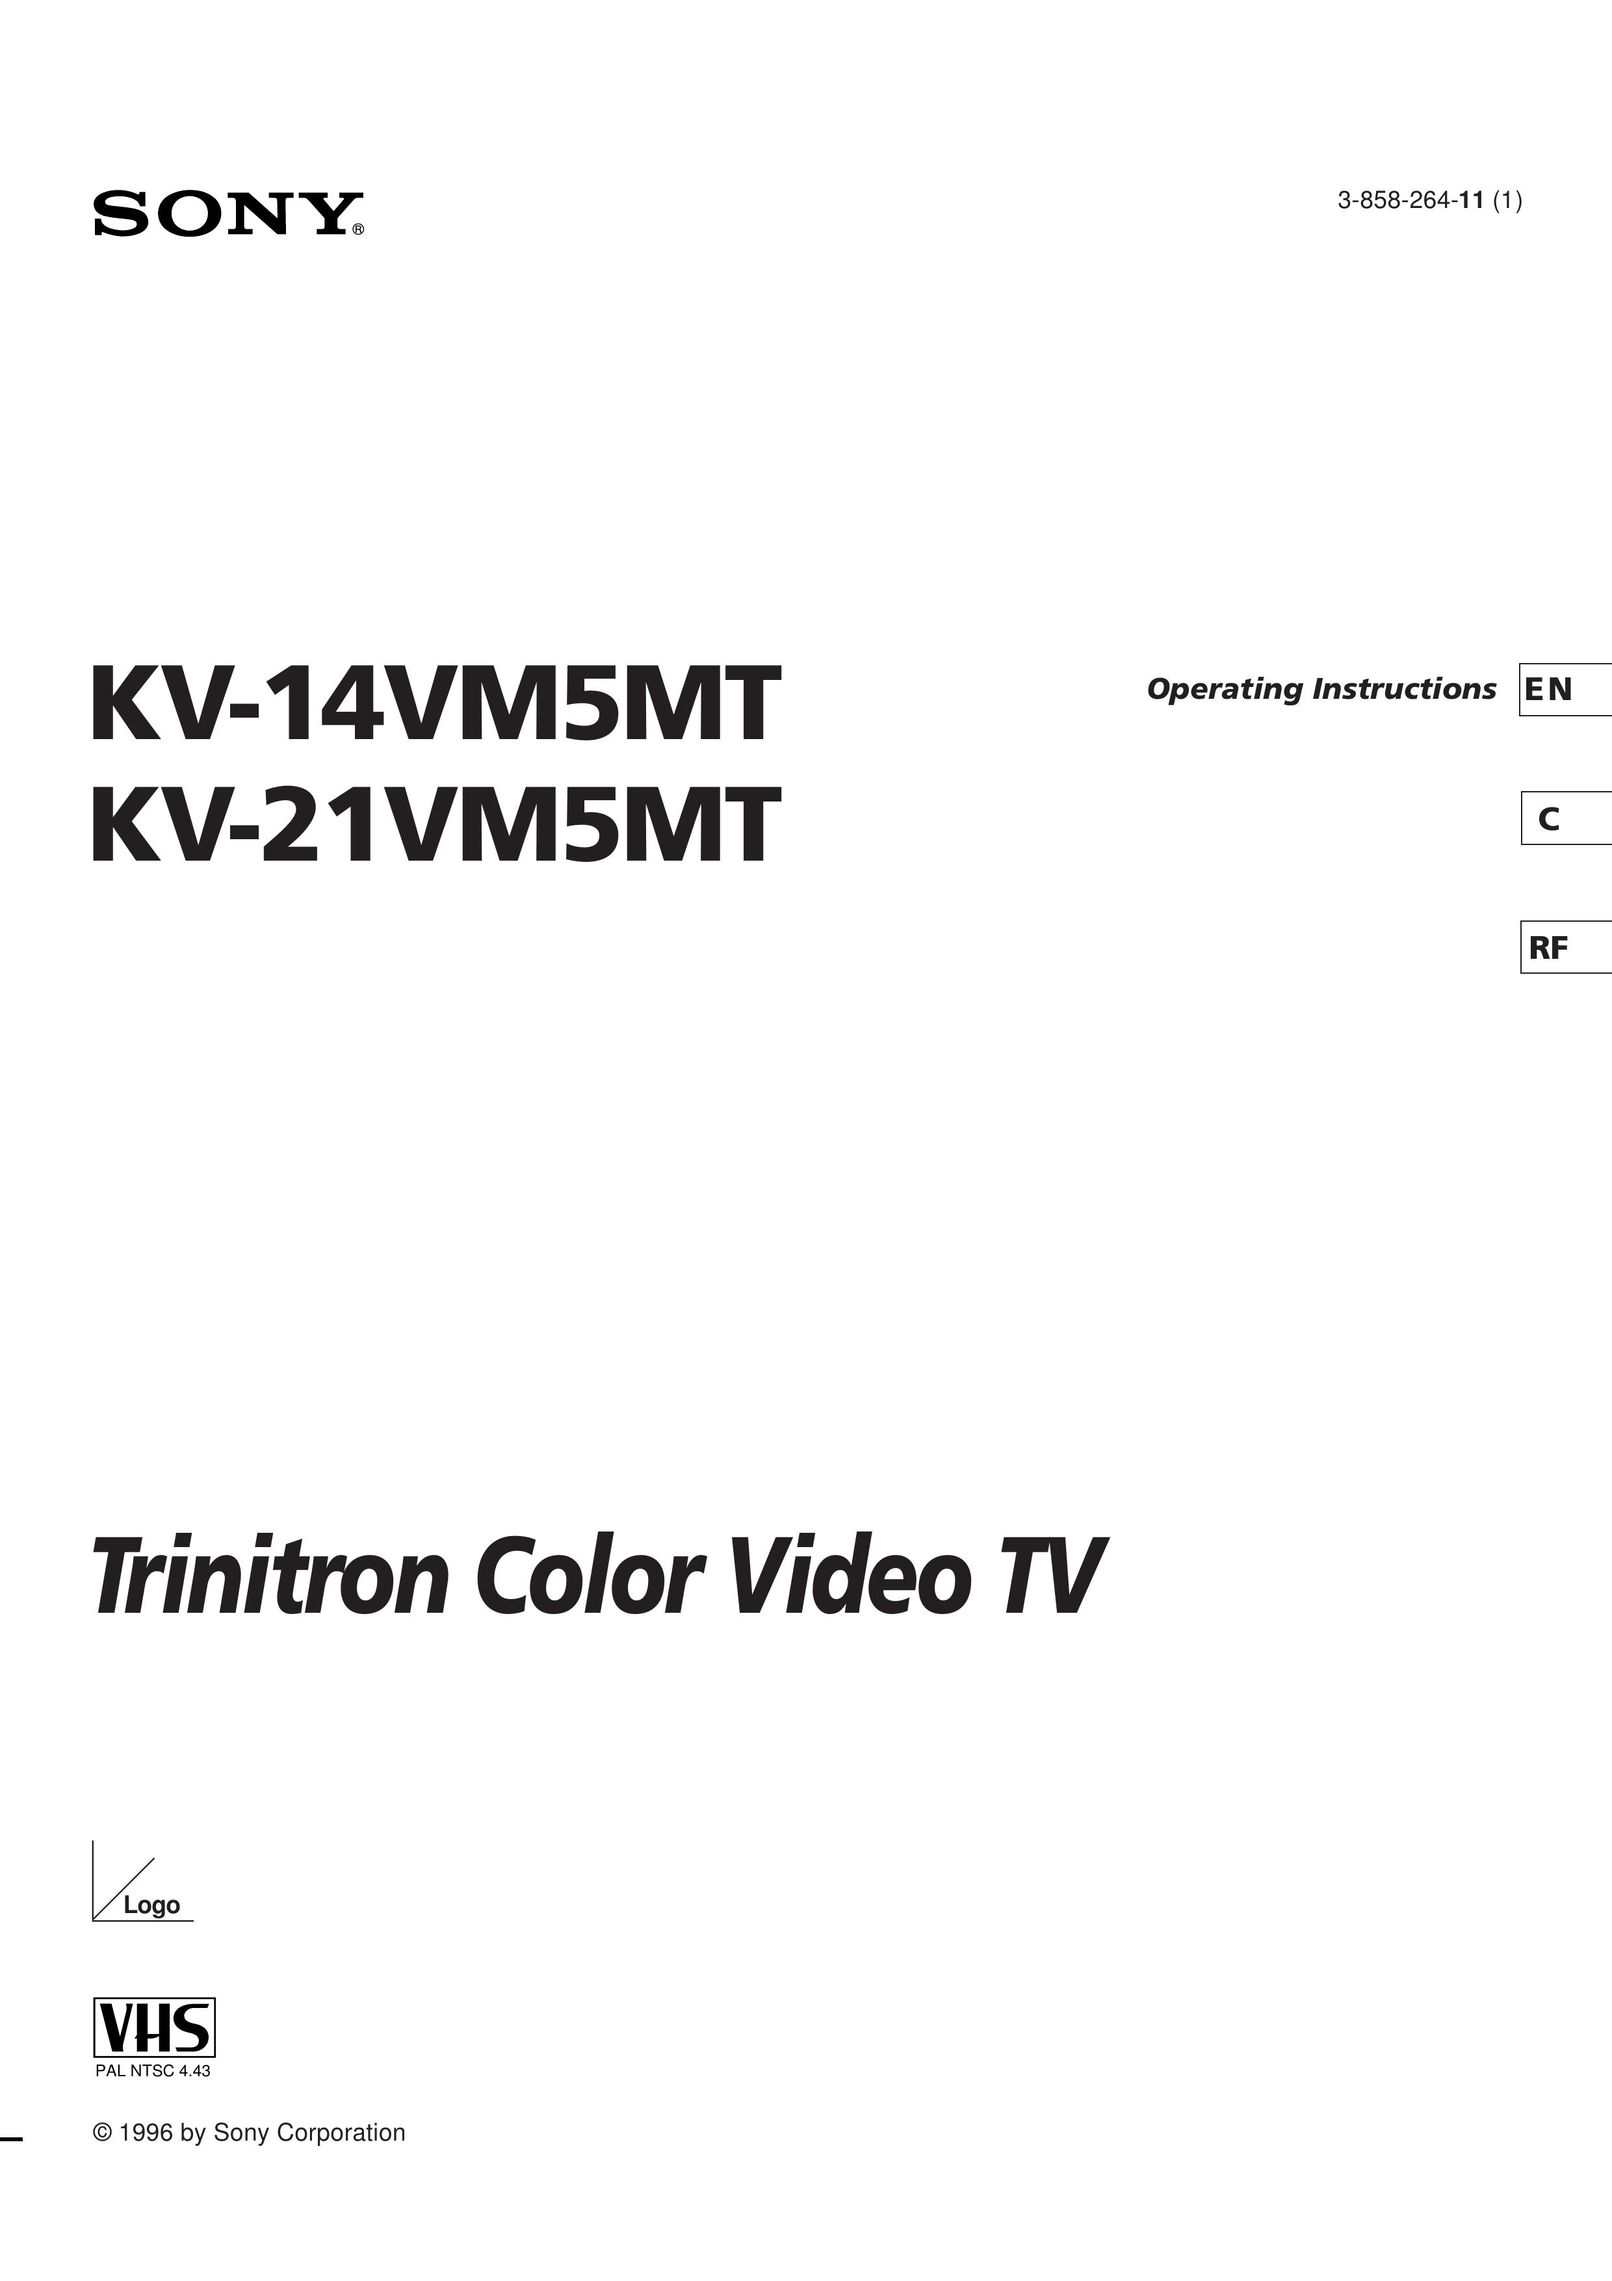 Sony KV-14VM5MT, KV-21VM6MT TV VCR Combo User Manual